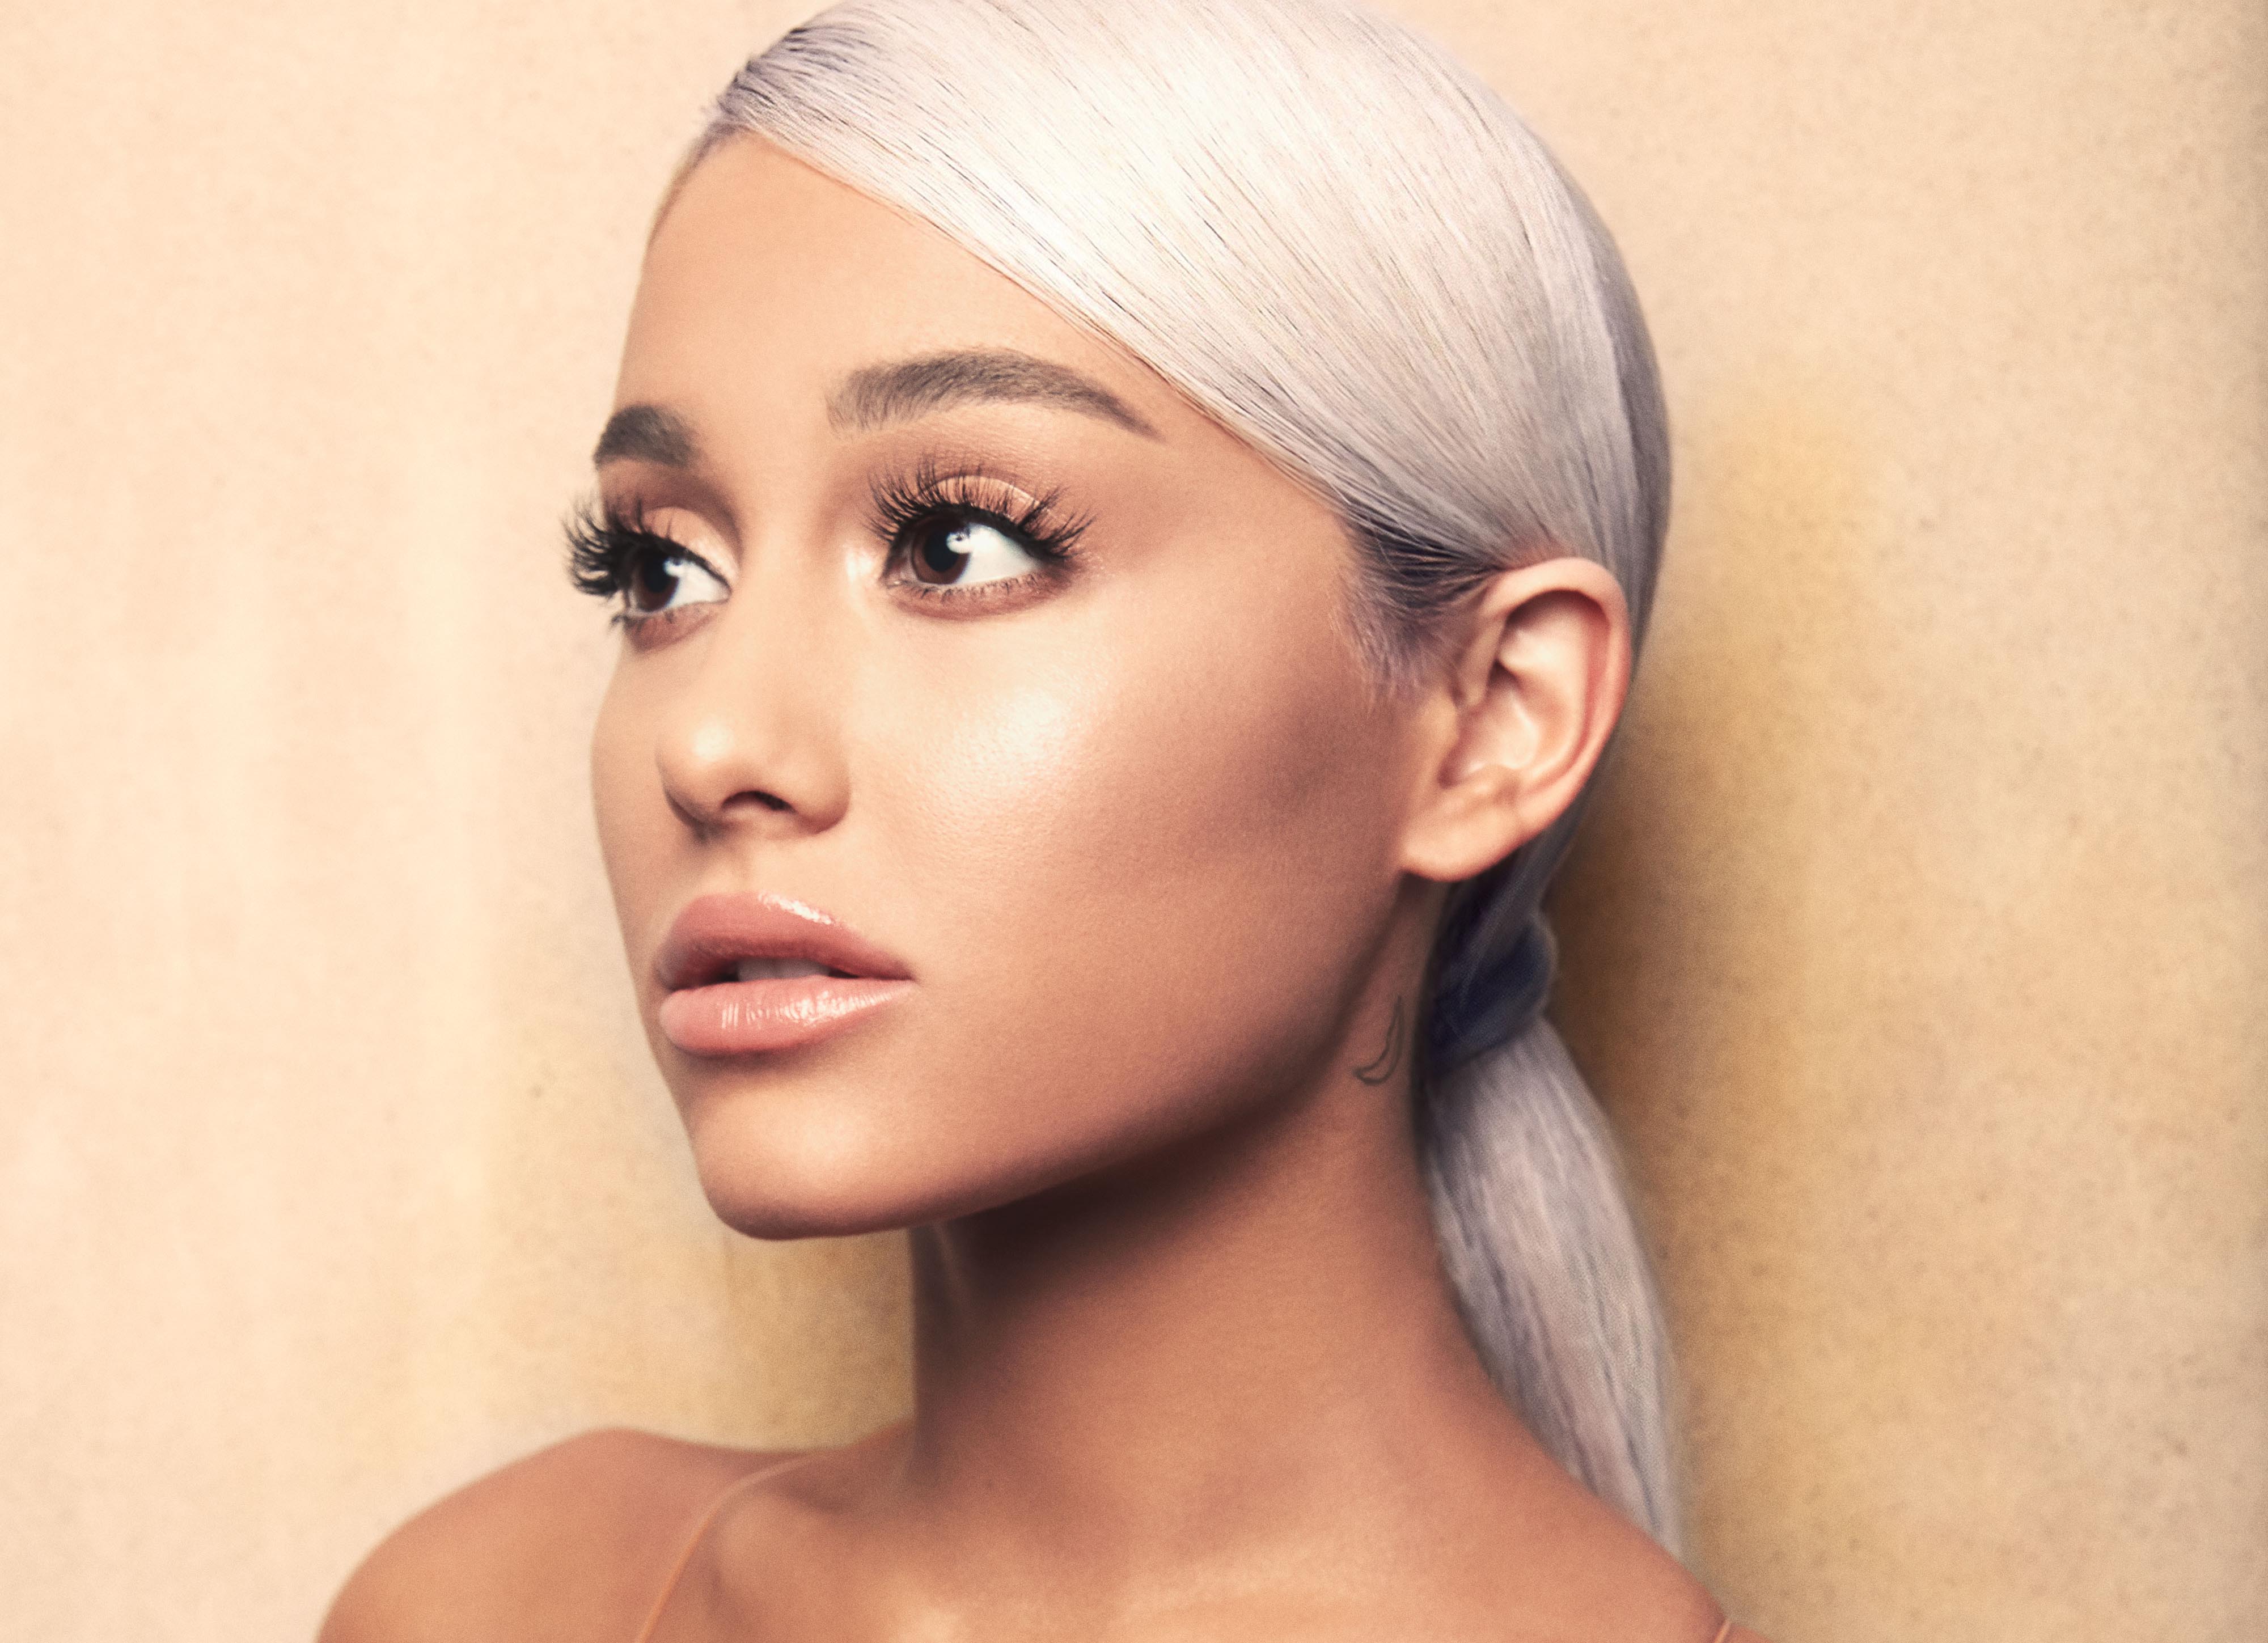 Ariana Grande Portrait Wallpapers